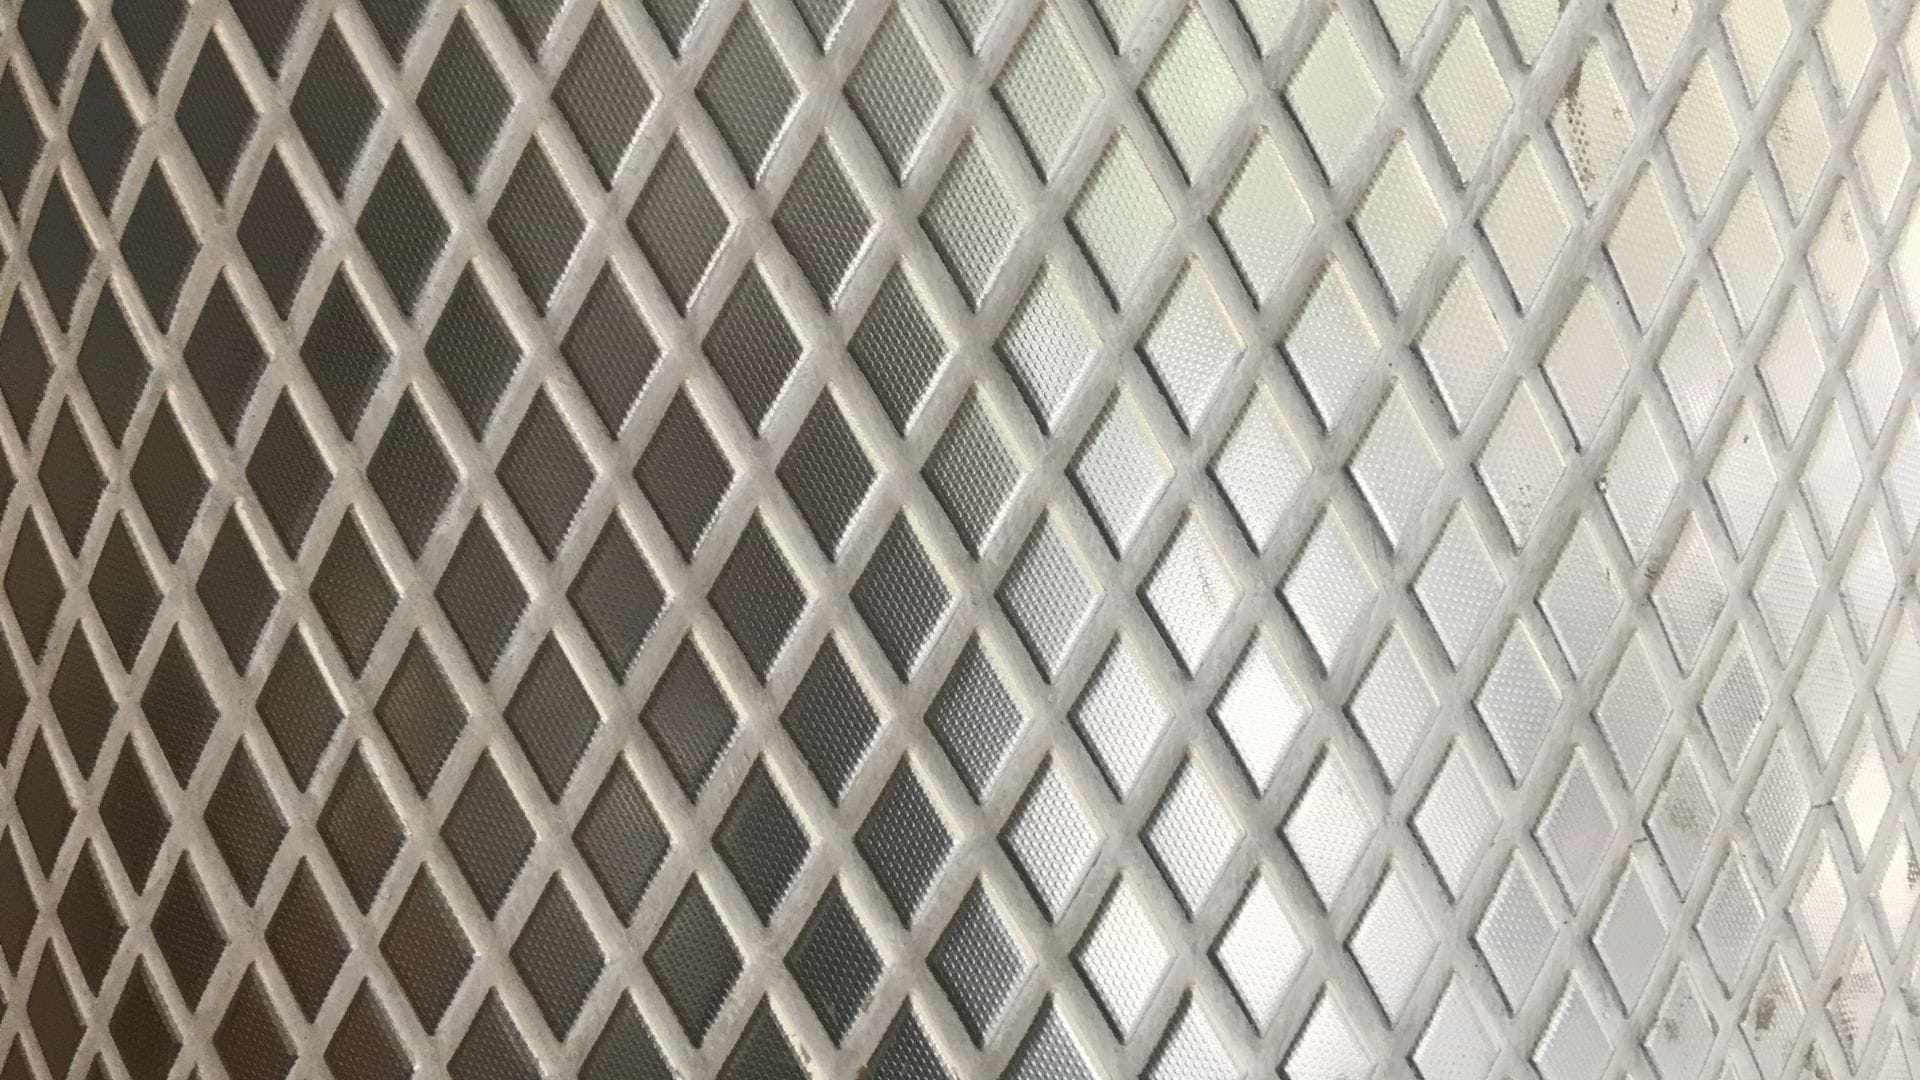 Metal tile